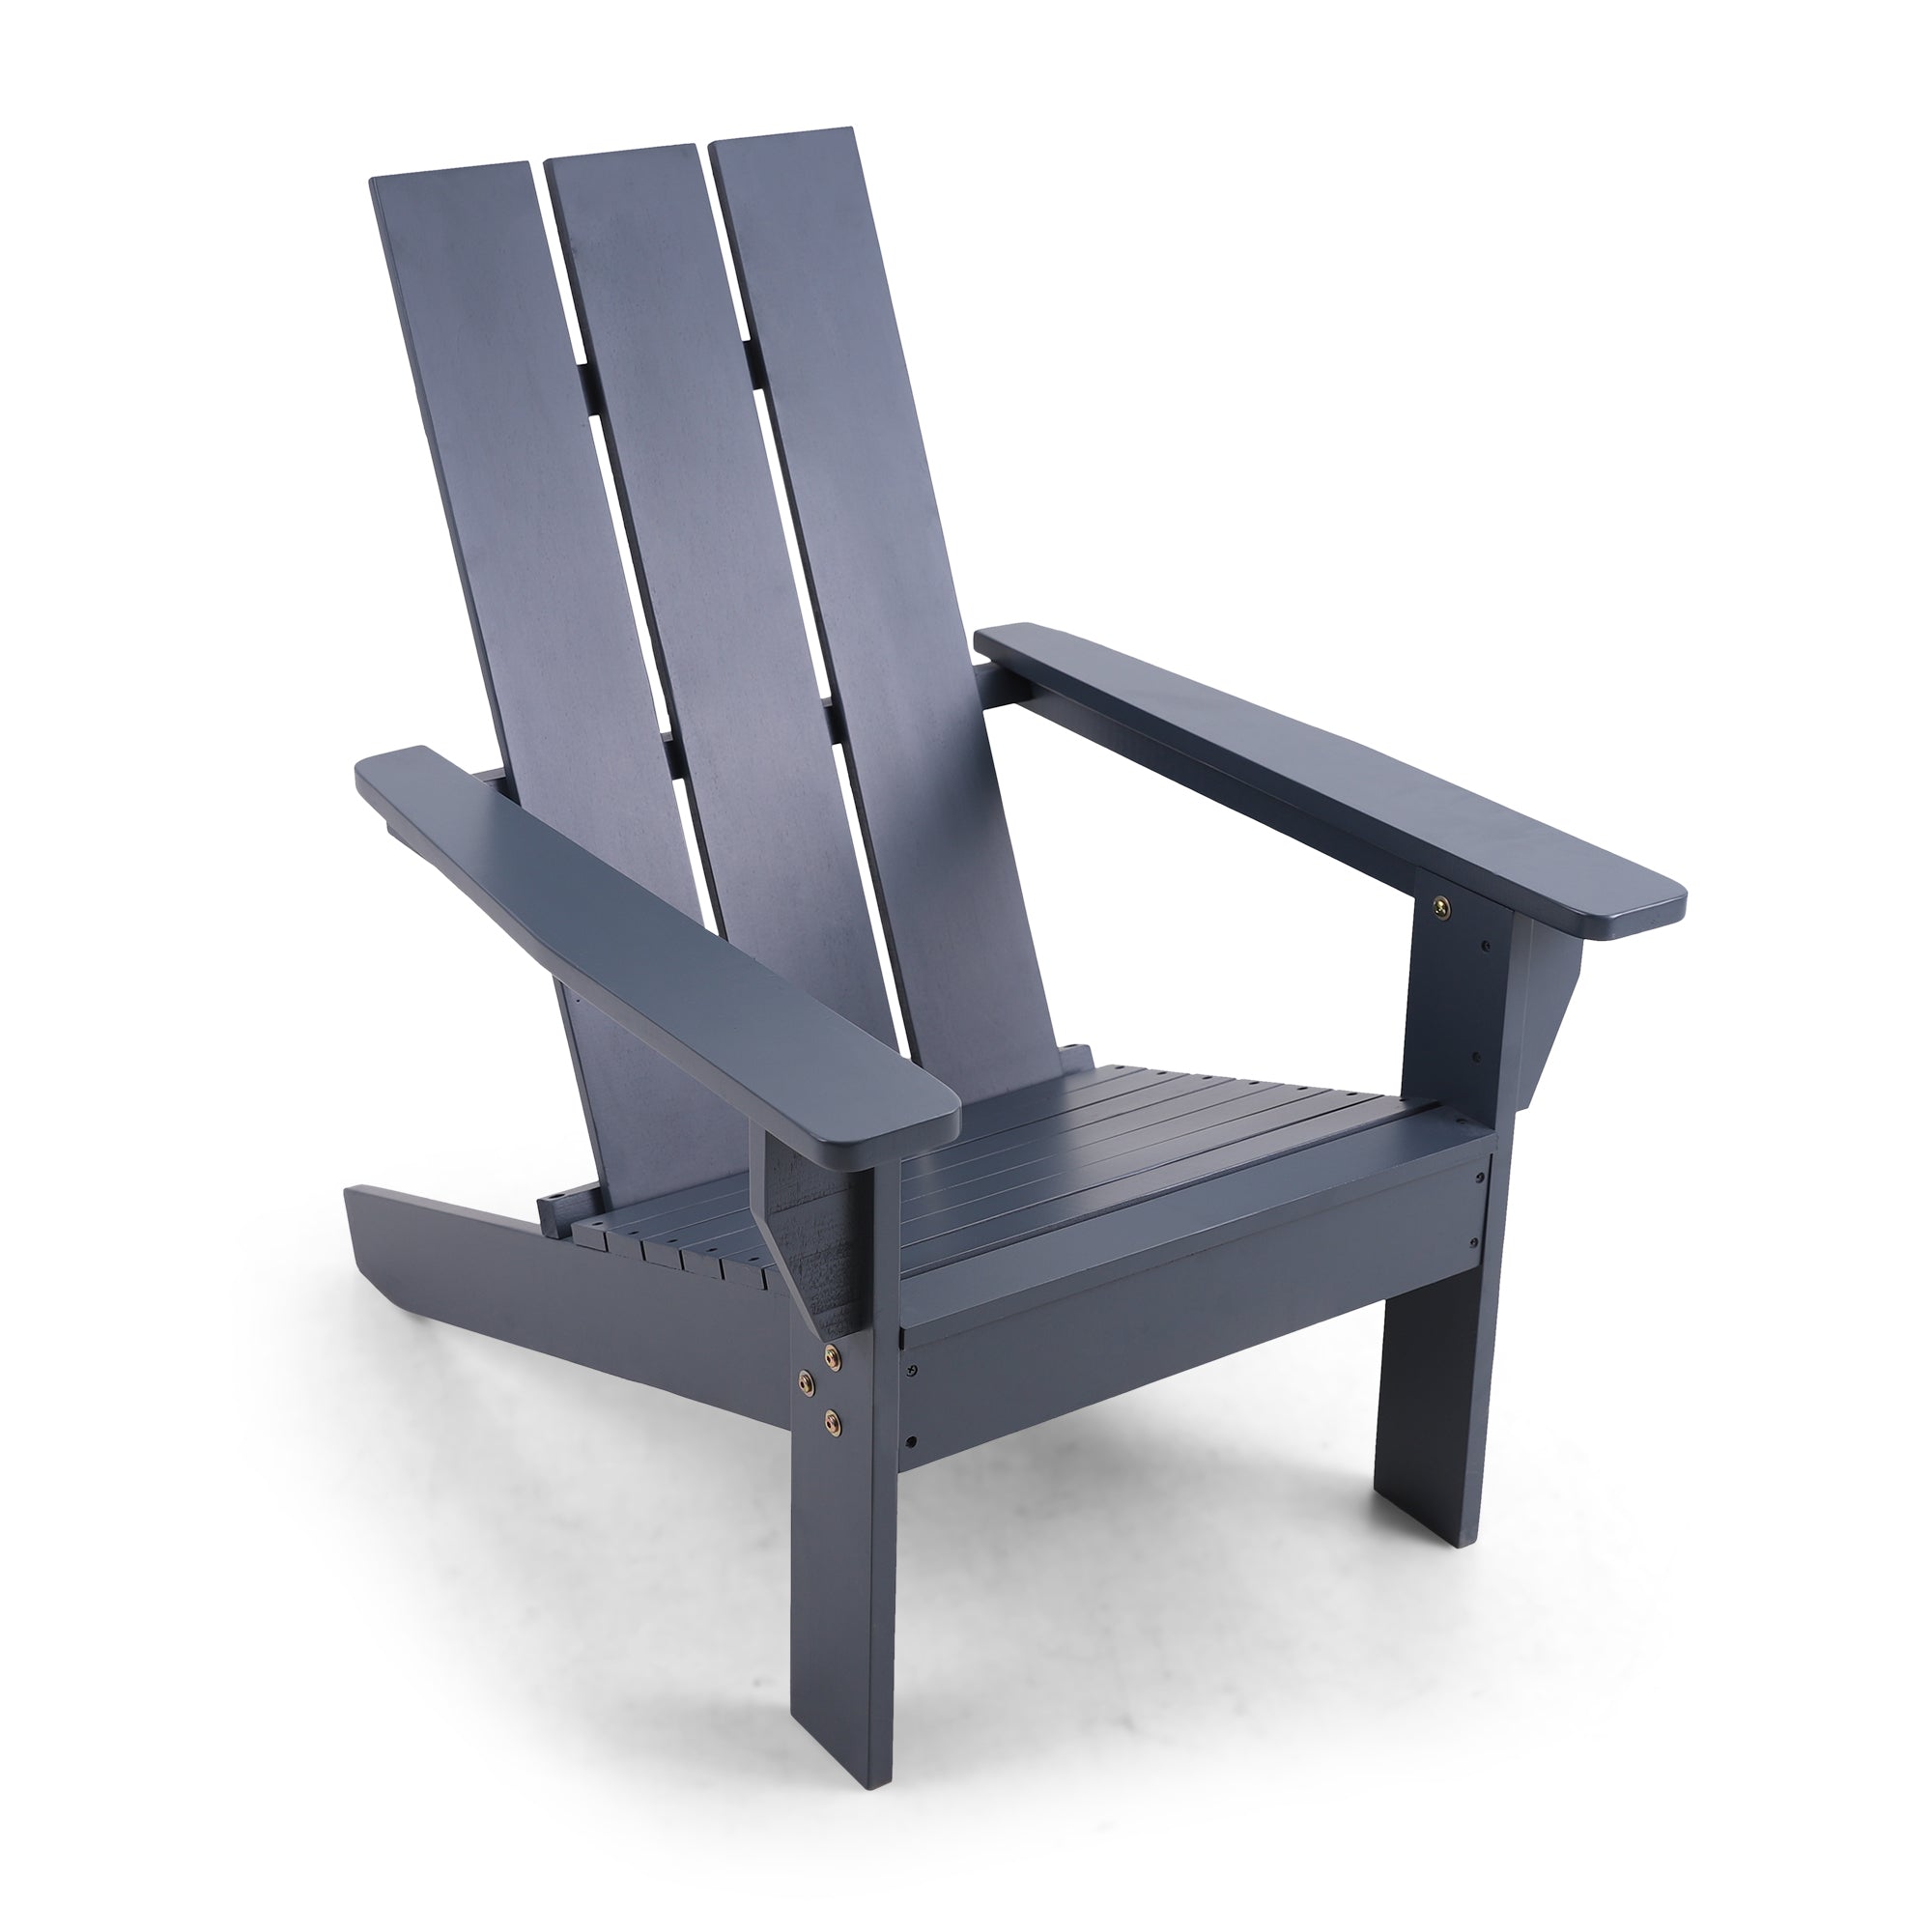 Sophia & William Grey Patio Wooden Adirondack Chair Lounge Chair for Garden Beach Balcony Backyard Lawn - image 2 of 5